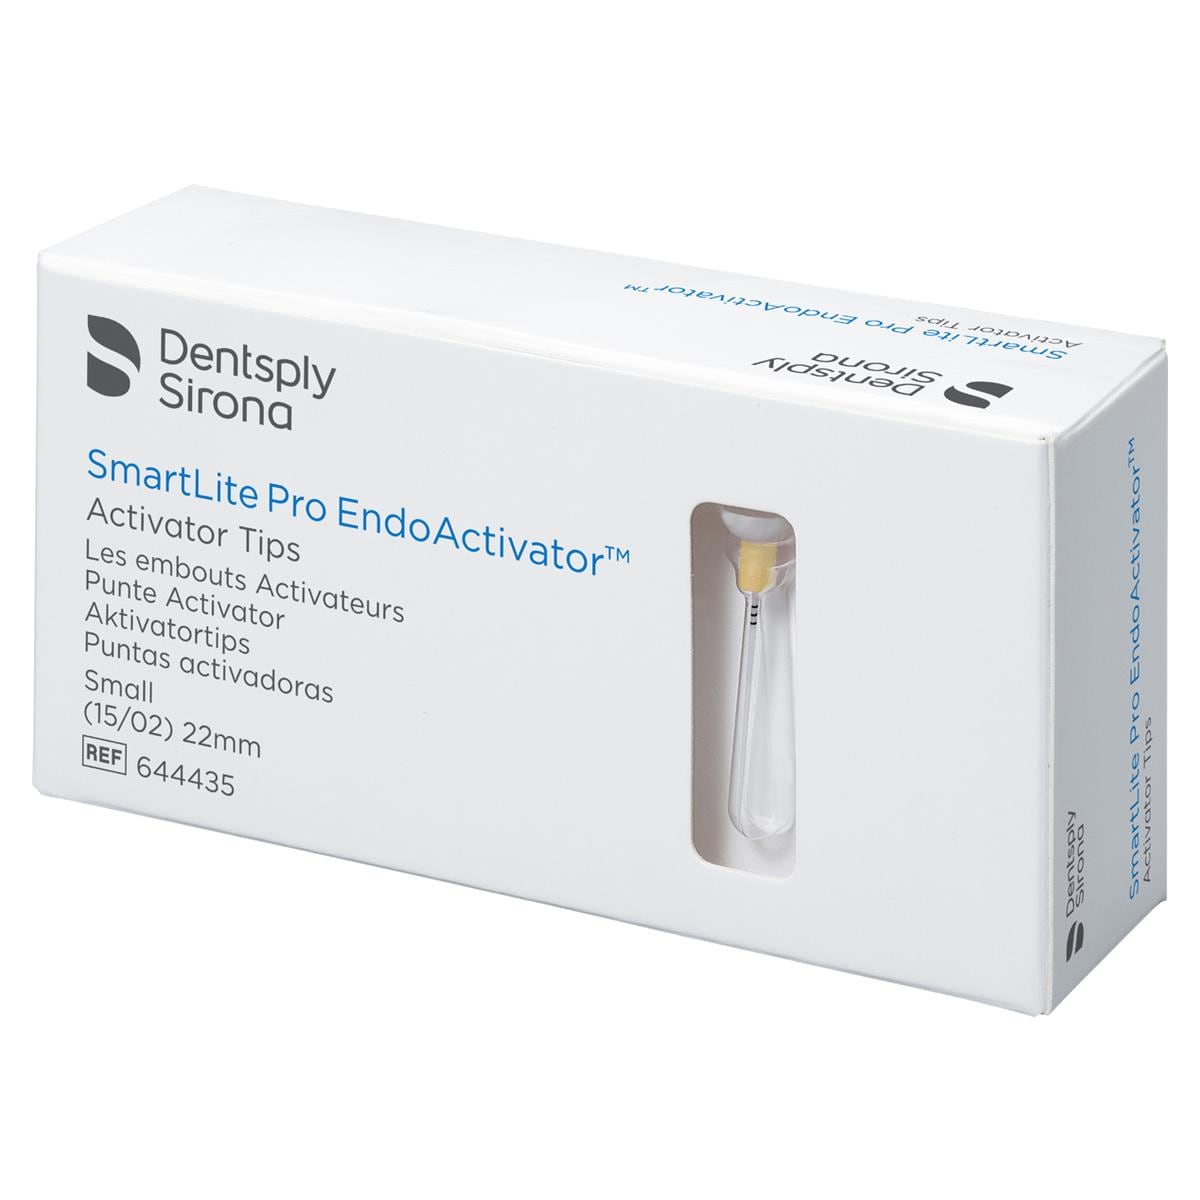 SmartLite Pro EndoActivator, Tips - Small, 25 stuks